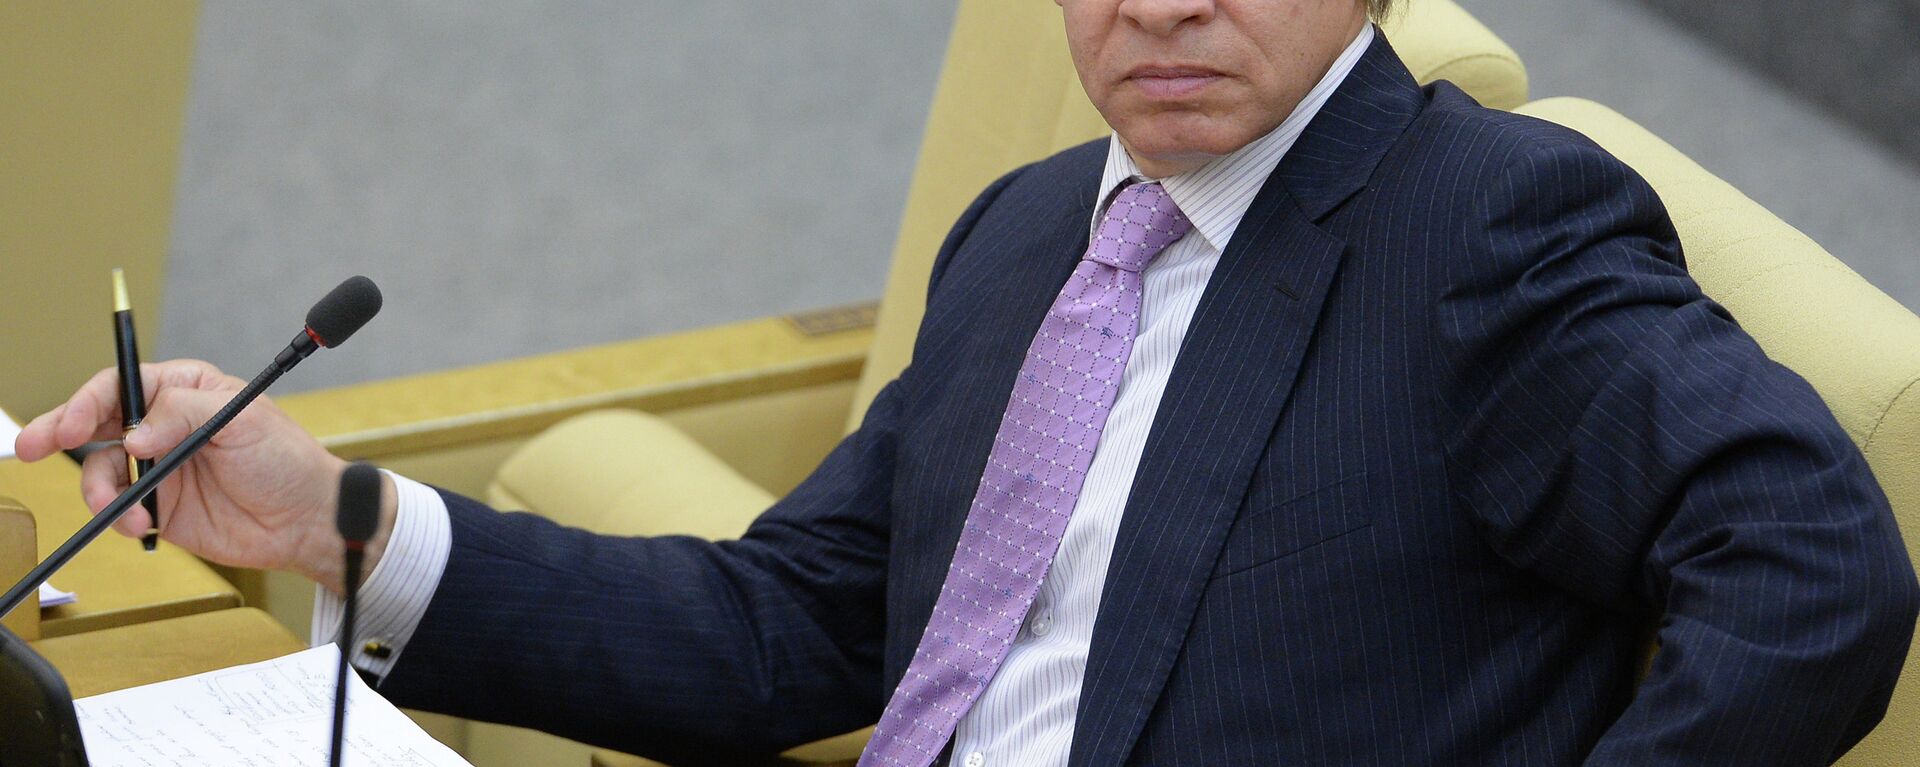 The chairman of the Russian State Duma’s International Committee Alexei Pushkov - Sputnik International, 1920, 08.06.2015